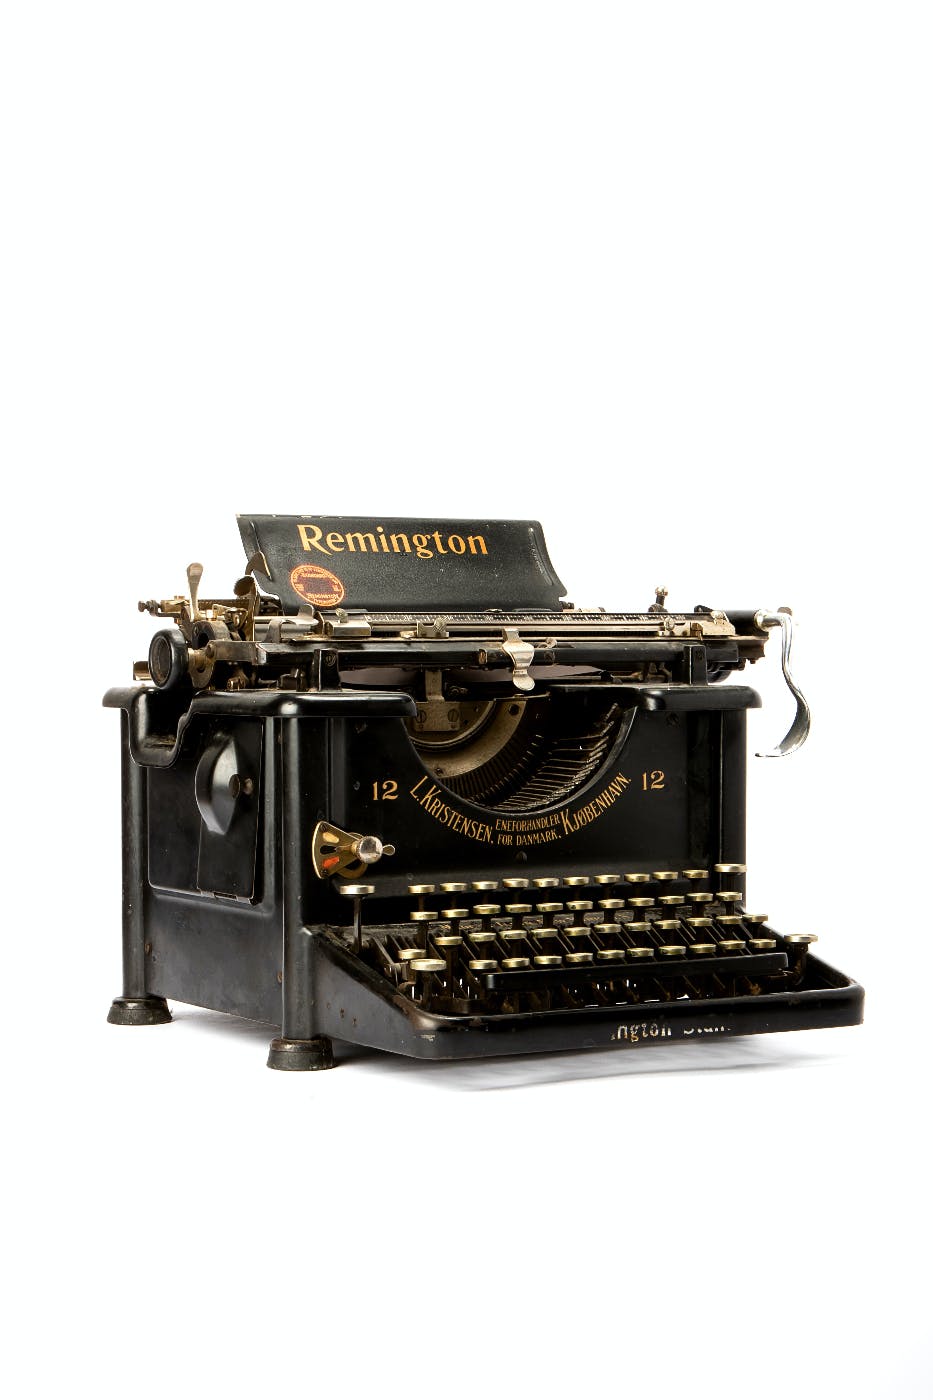 A classic black Remmington Typewriter